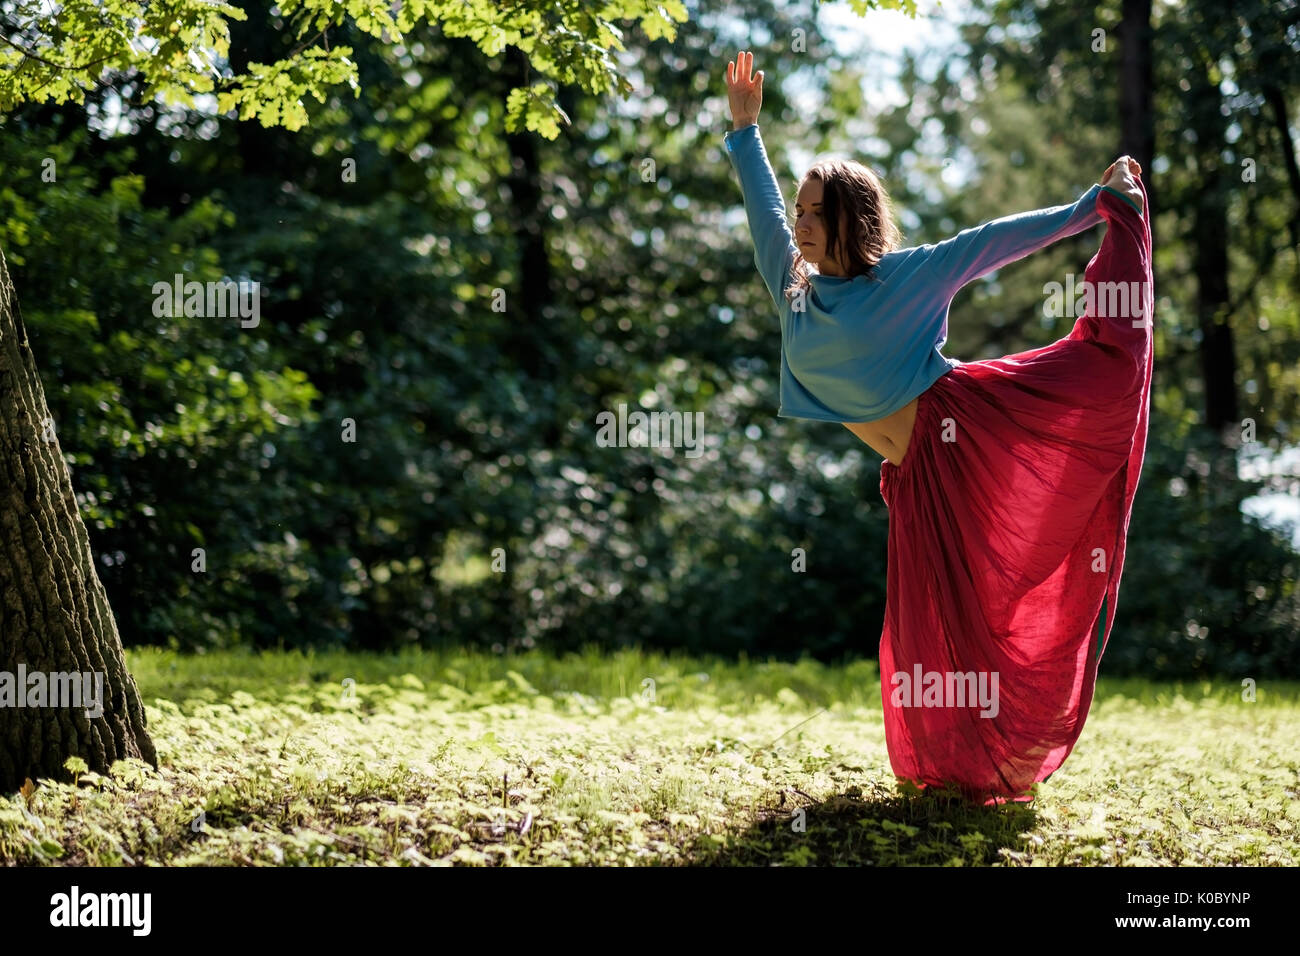 Sporty fit caucasian woman doing asana Virabhadrasana 2 Warrior pose posture in nature. Stock Photo